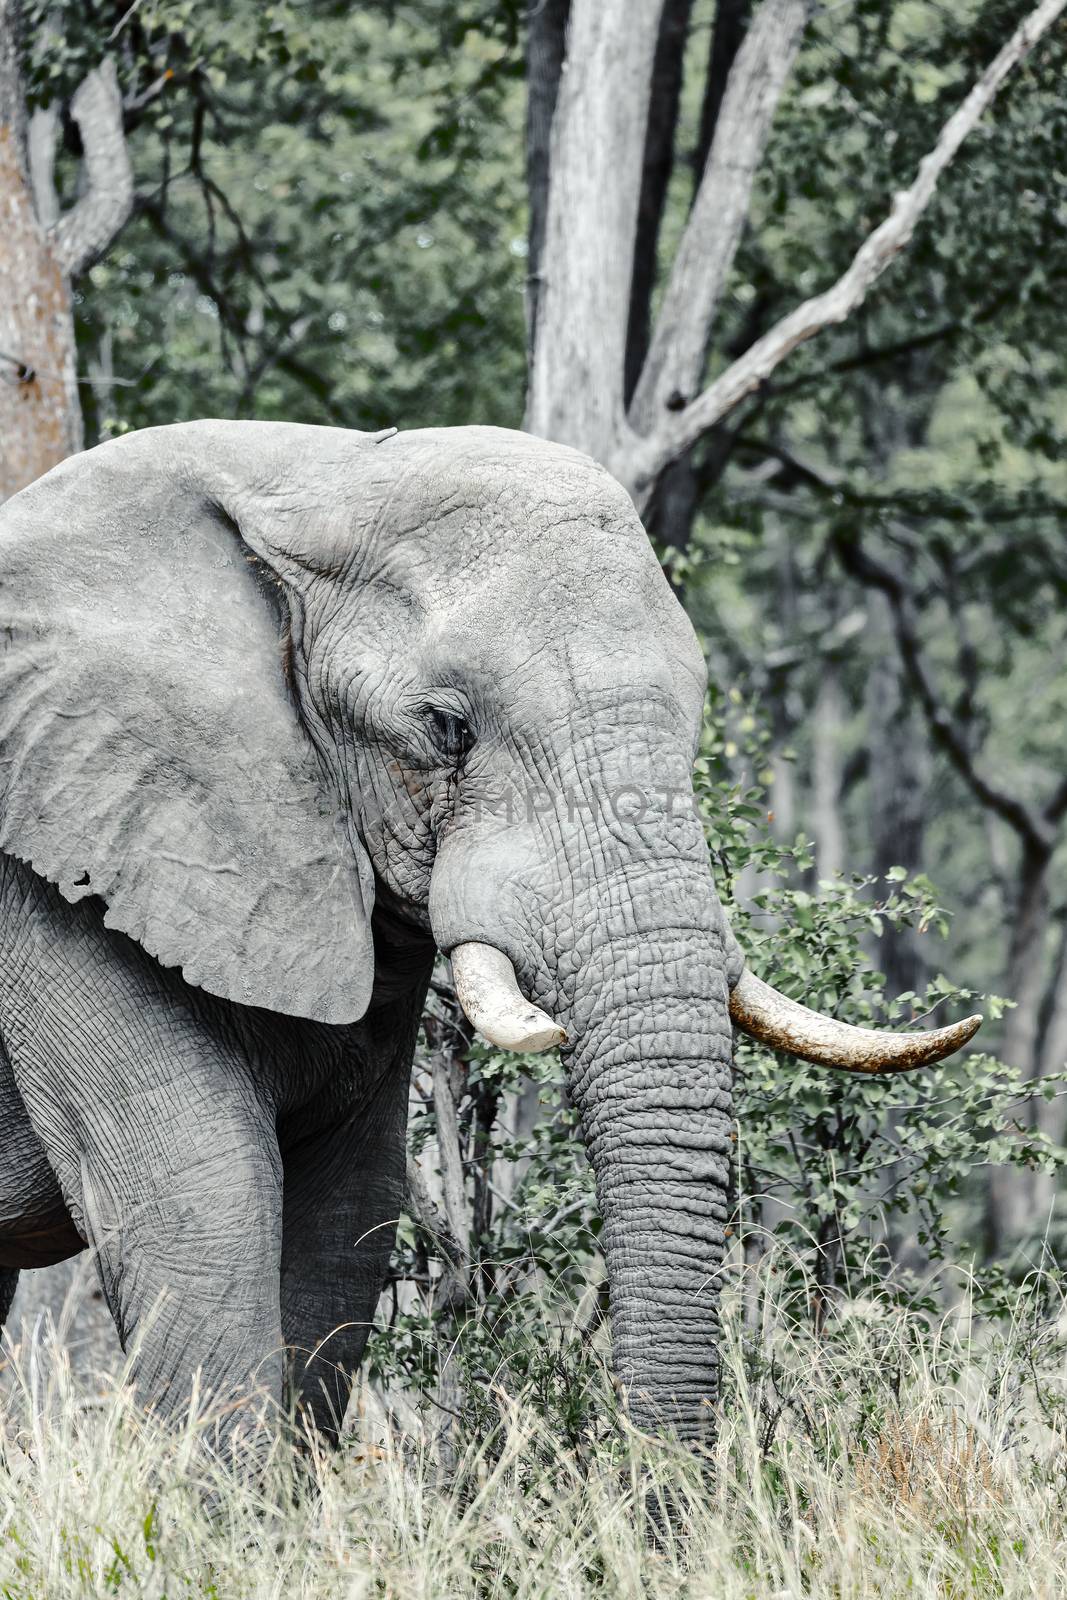 Majestic African Elephant in Moremi game reserve, Botswana safari wildlife